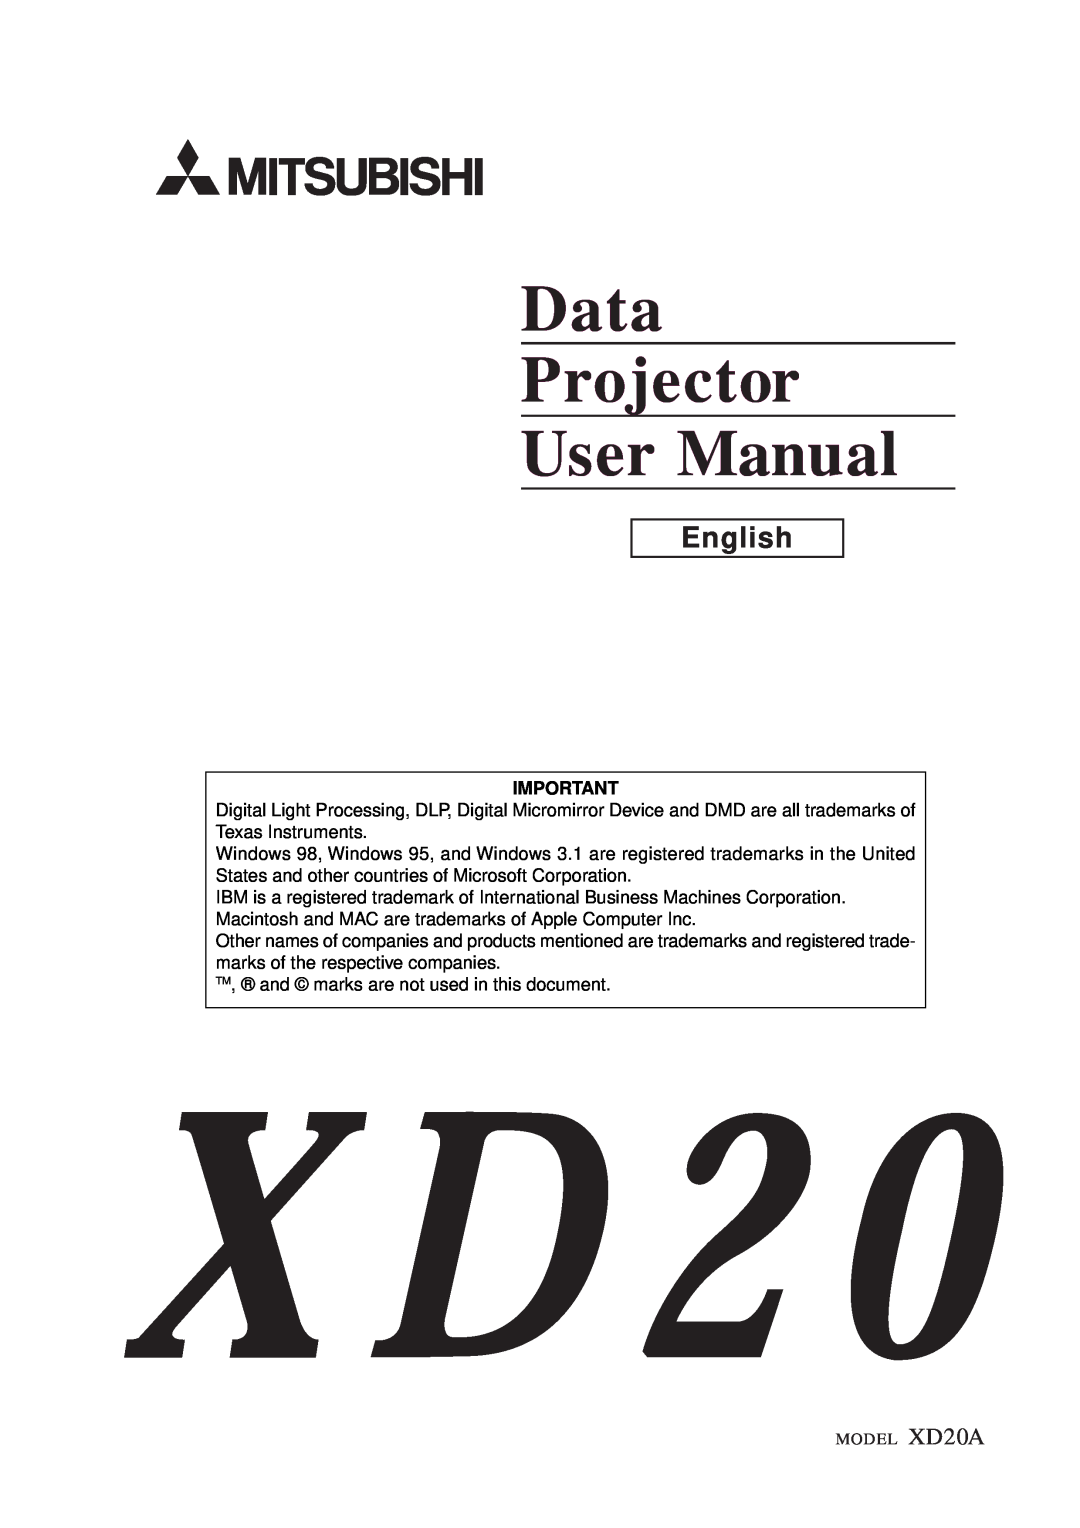 Mitsubishi Electronics XD20A user manual Data Projector User Manual, English 